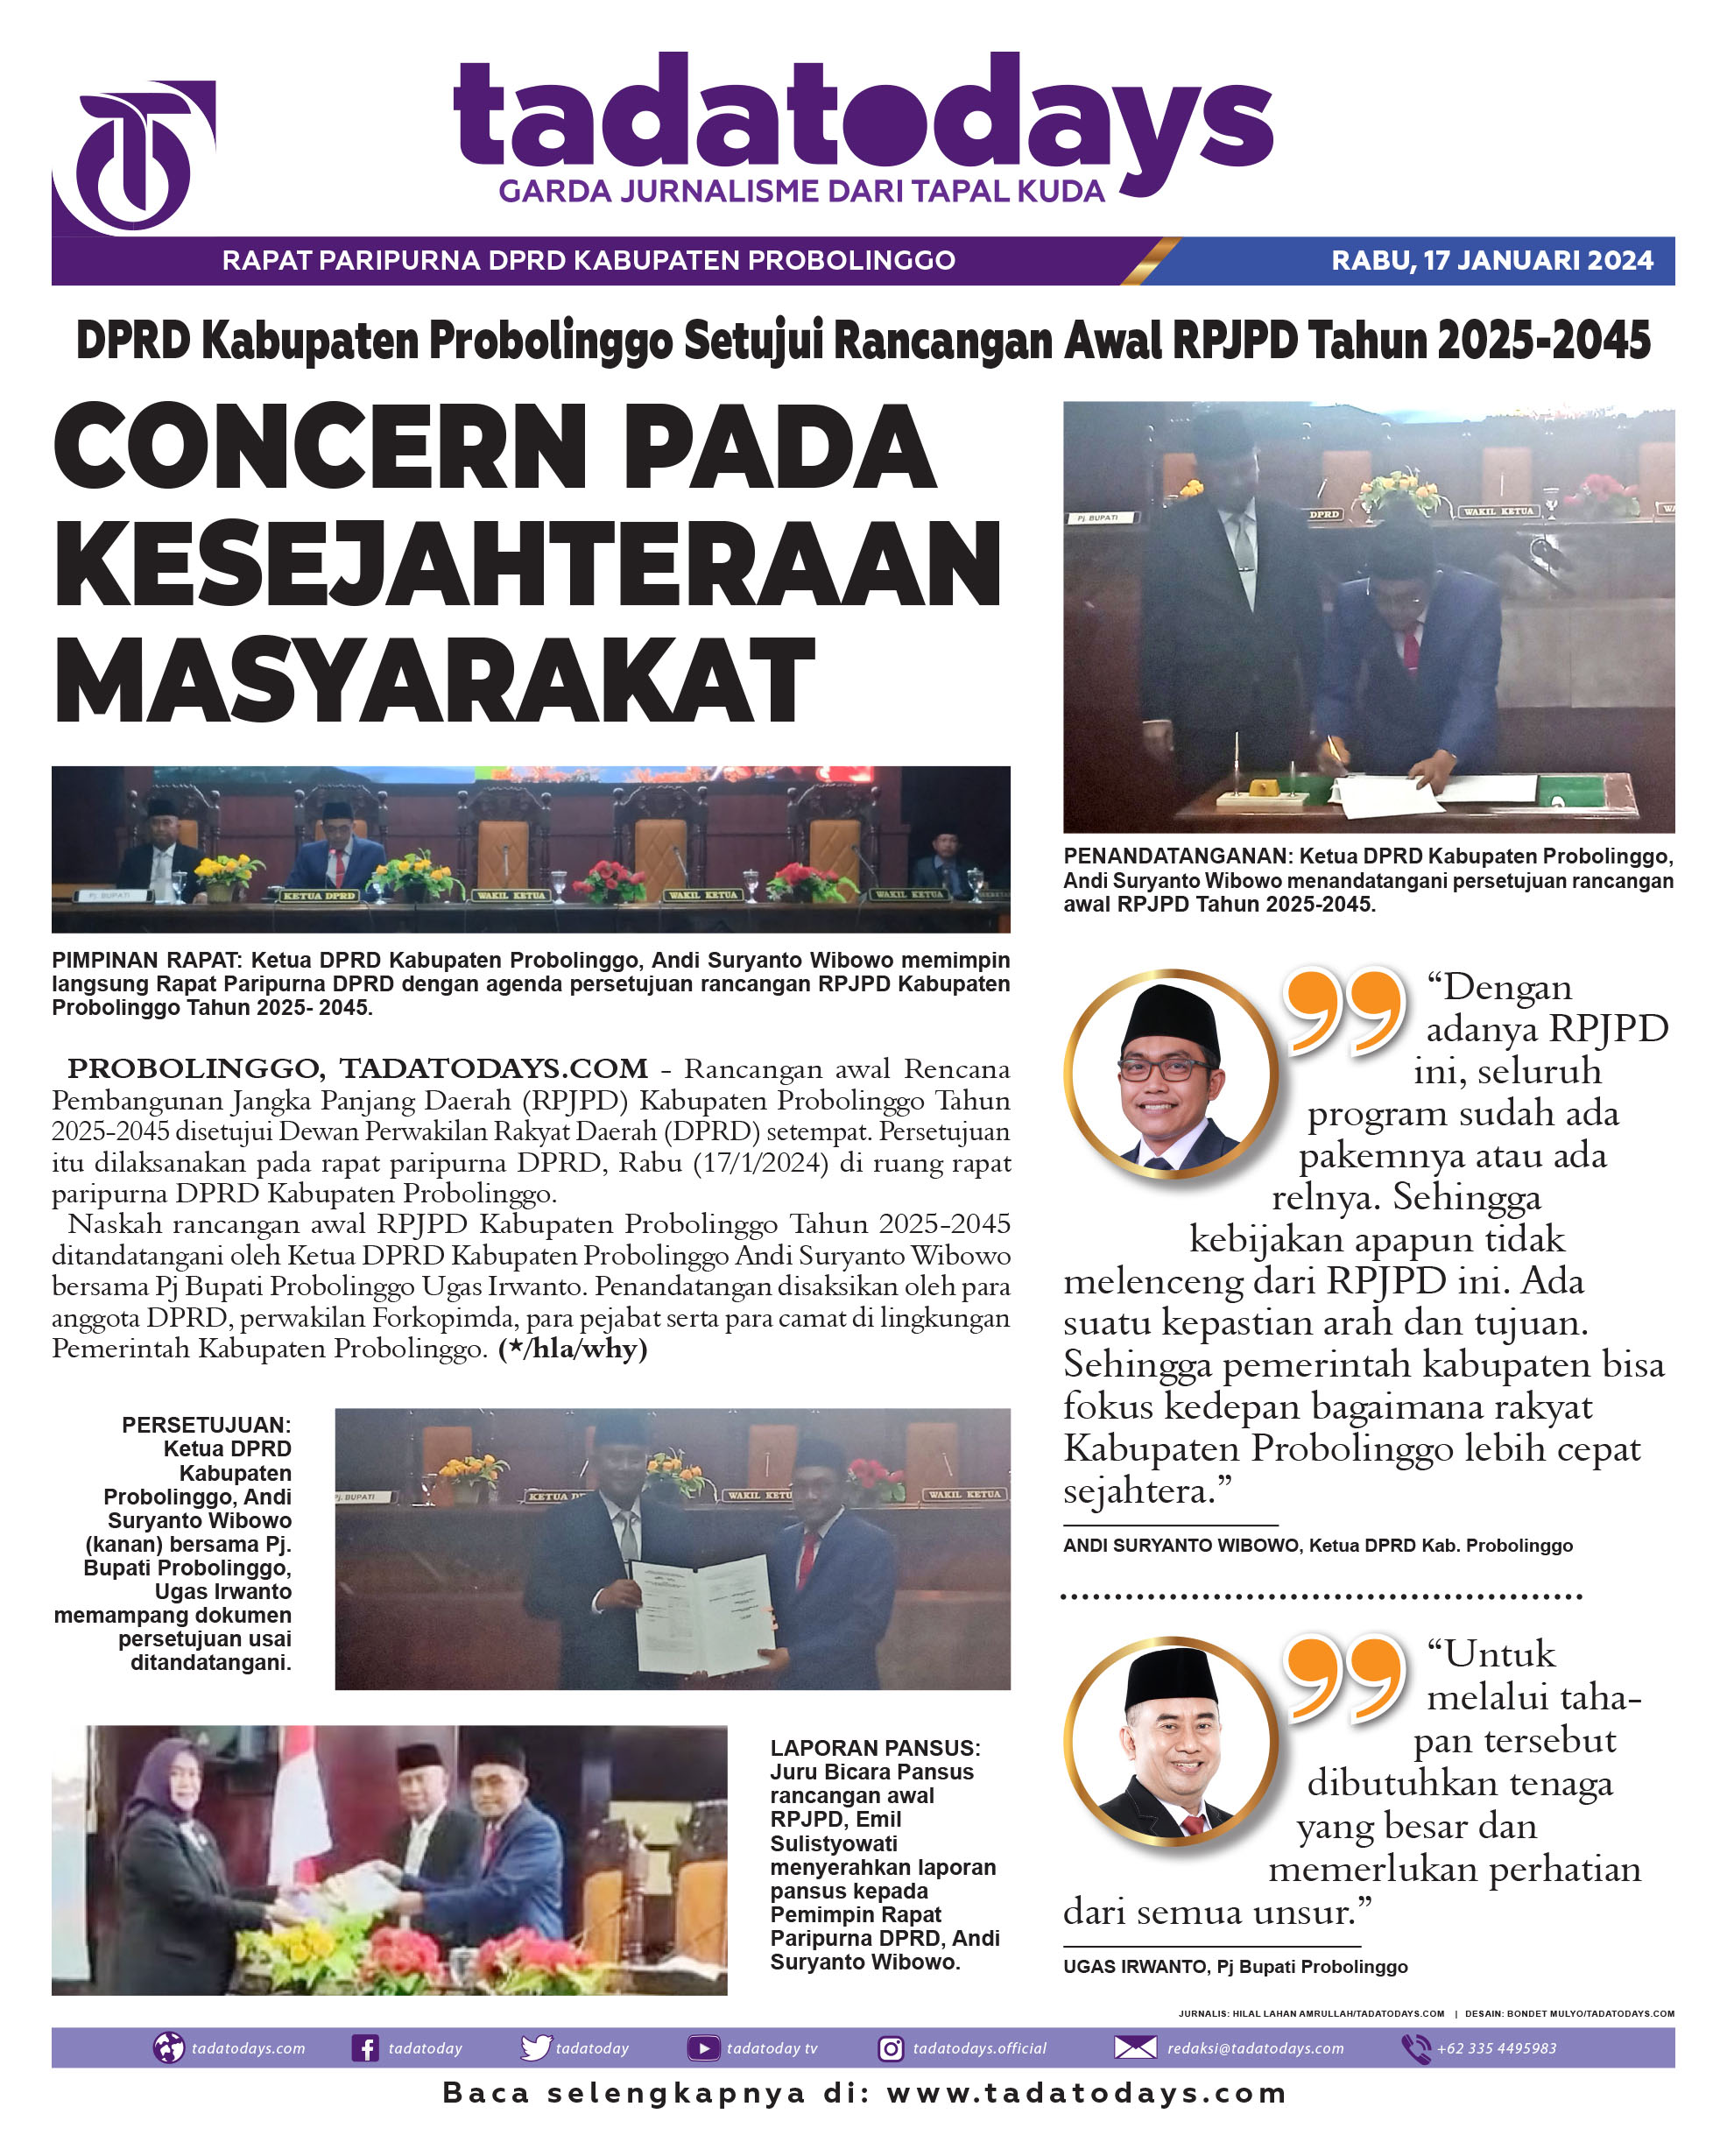 DPRD Kabupaten Probolinggo Menyetujui Rancangan Awal RPJPD Tahun 2025-2045